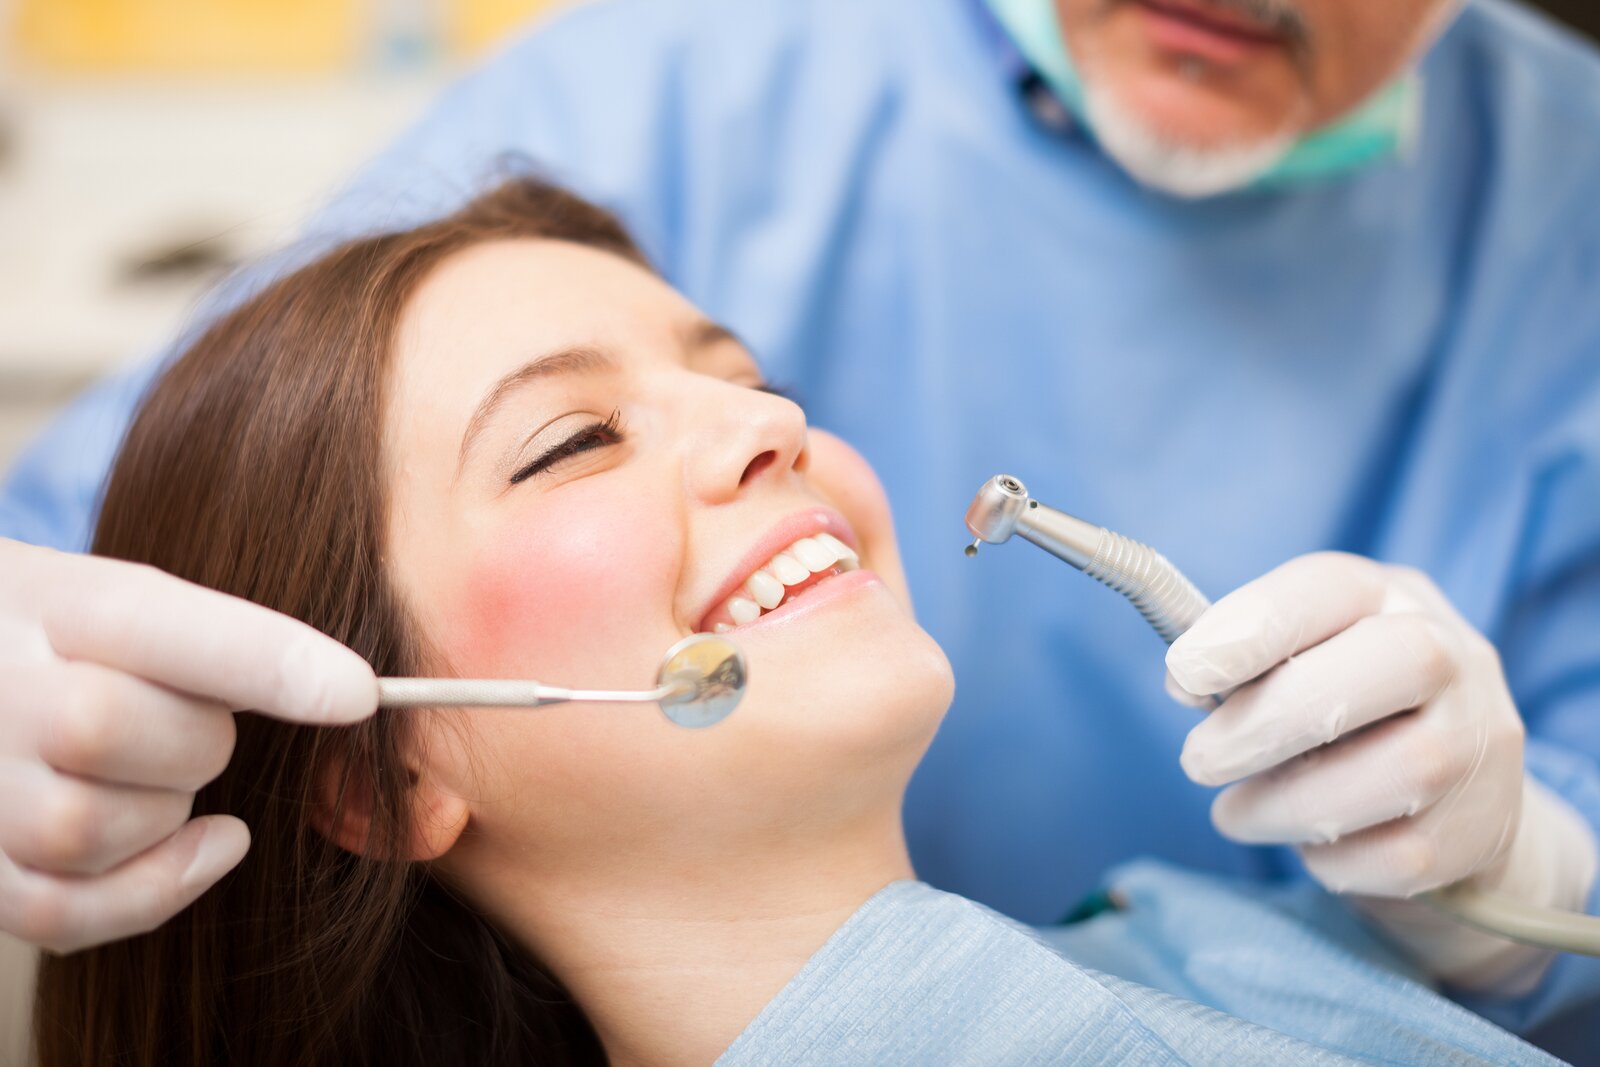 Essential Information on Dental Clinics